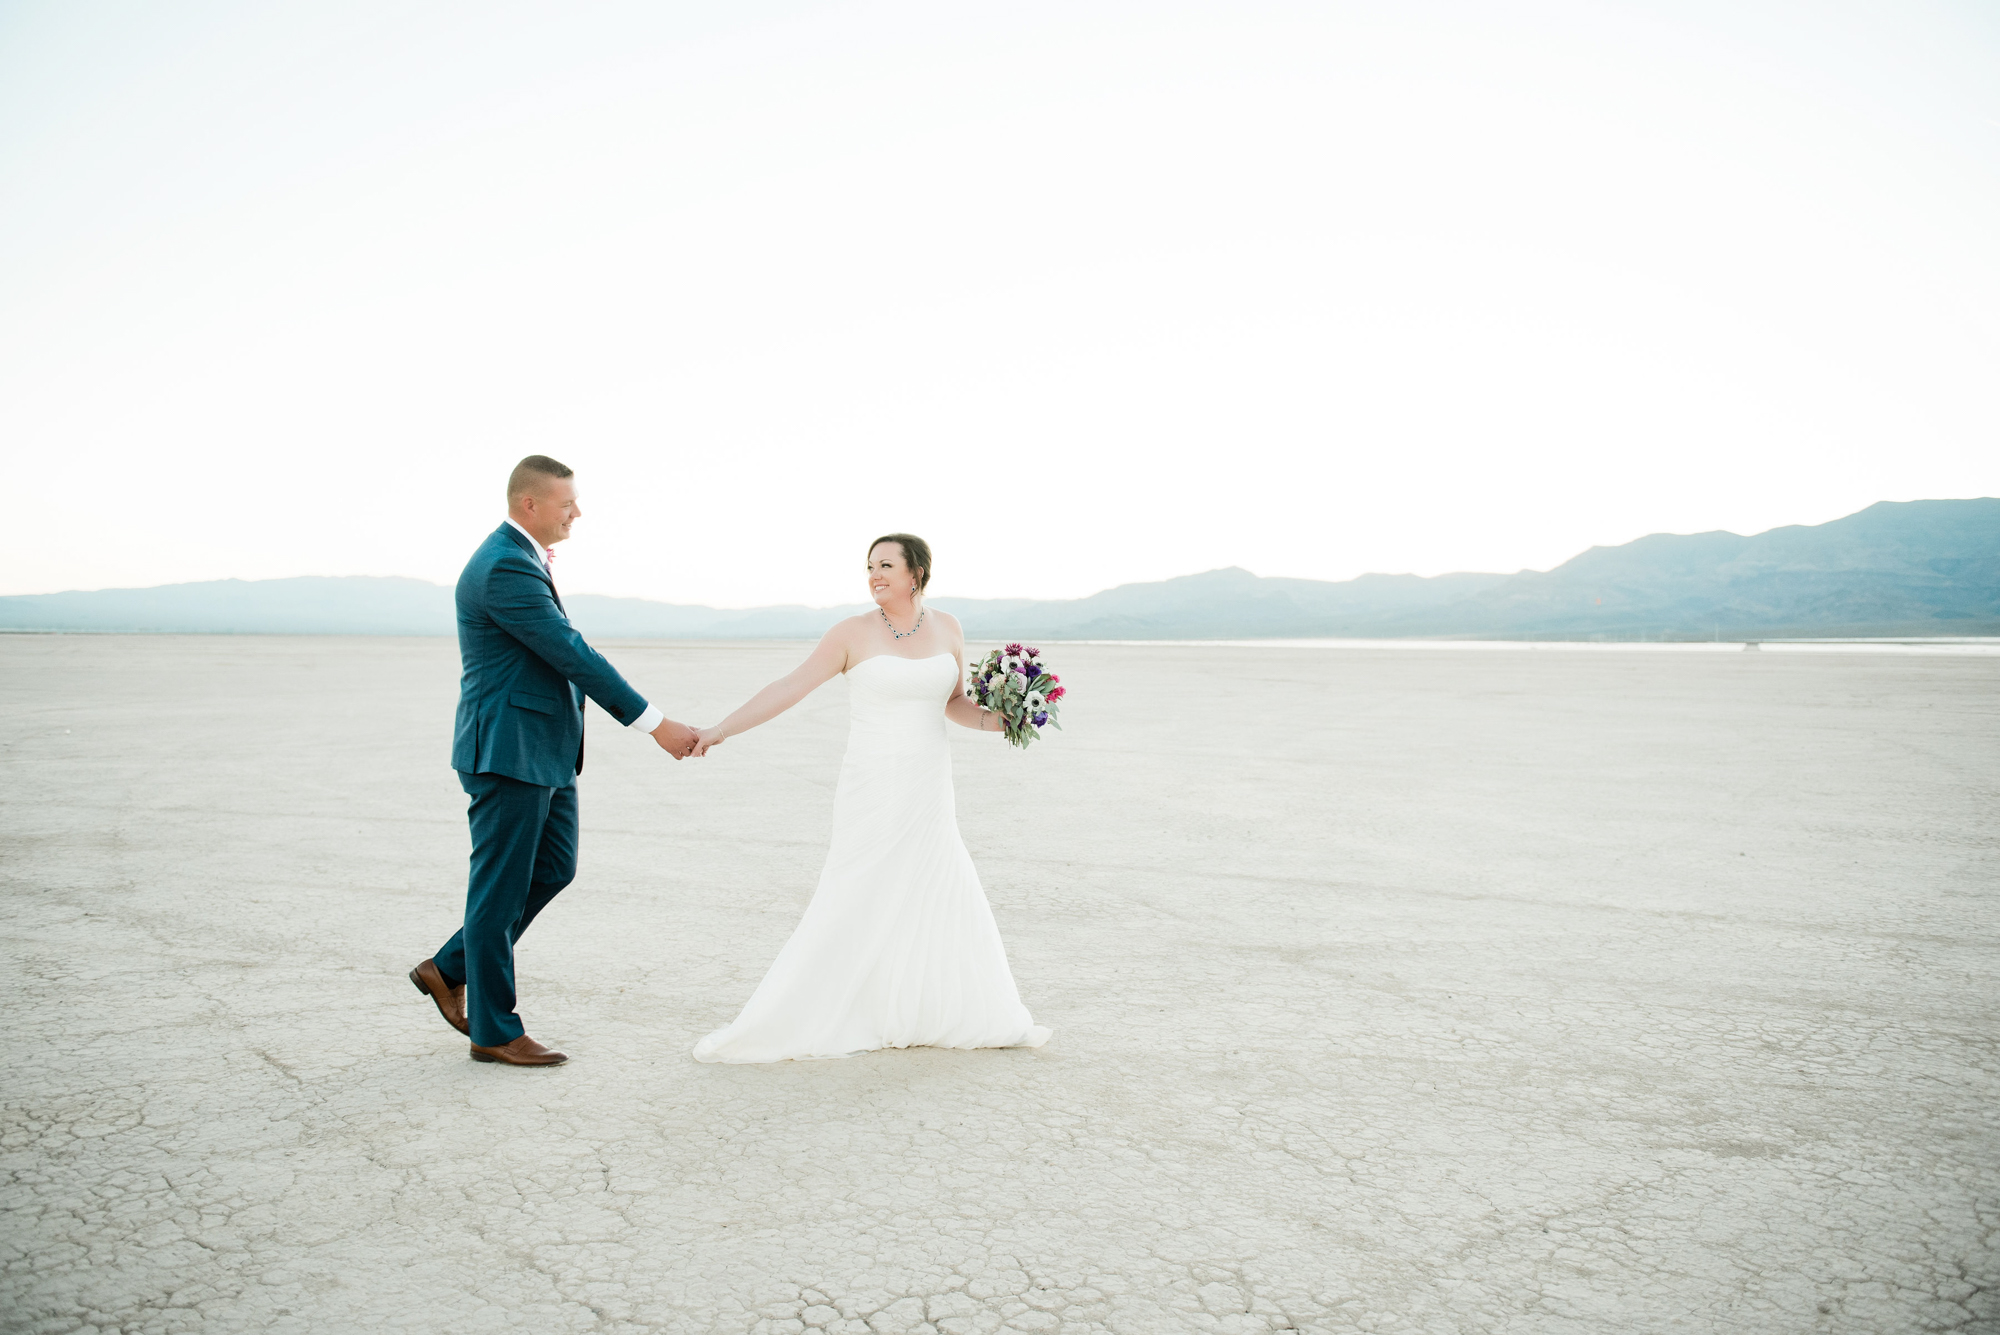 Jennifer + Scott: A Real Wedding in Dry Lake Bed